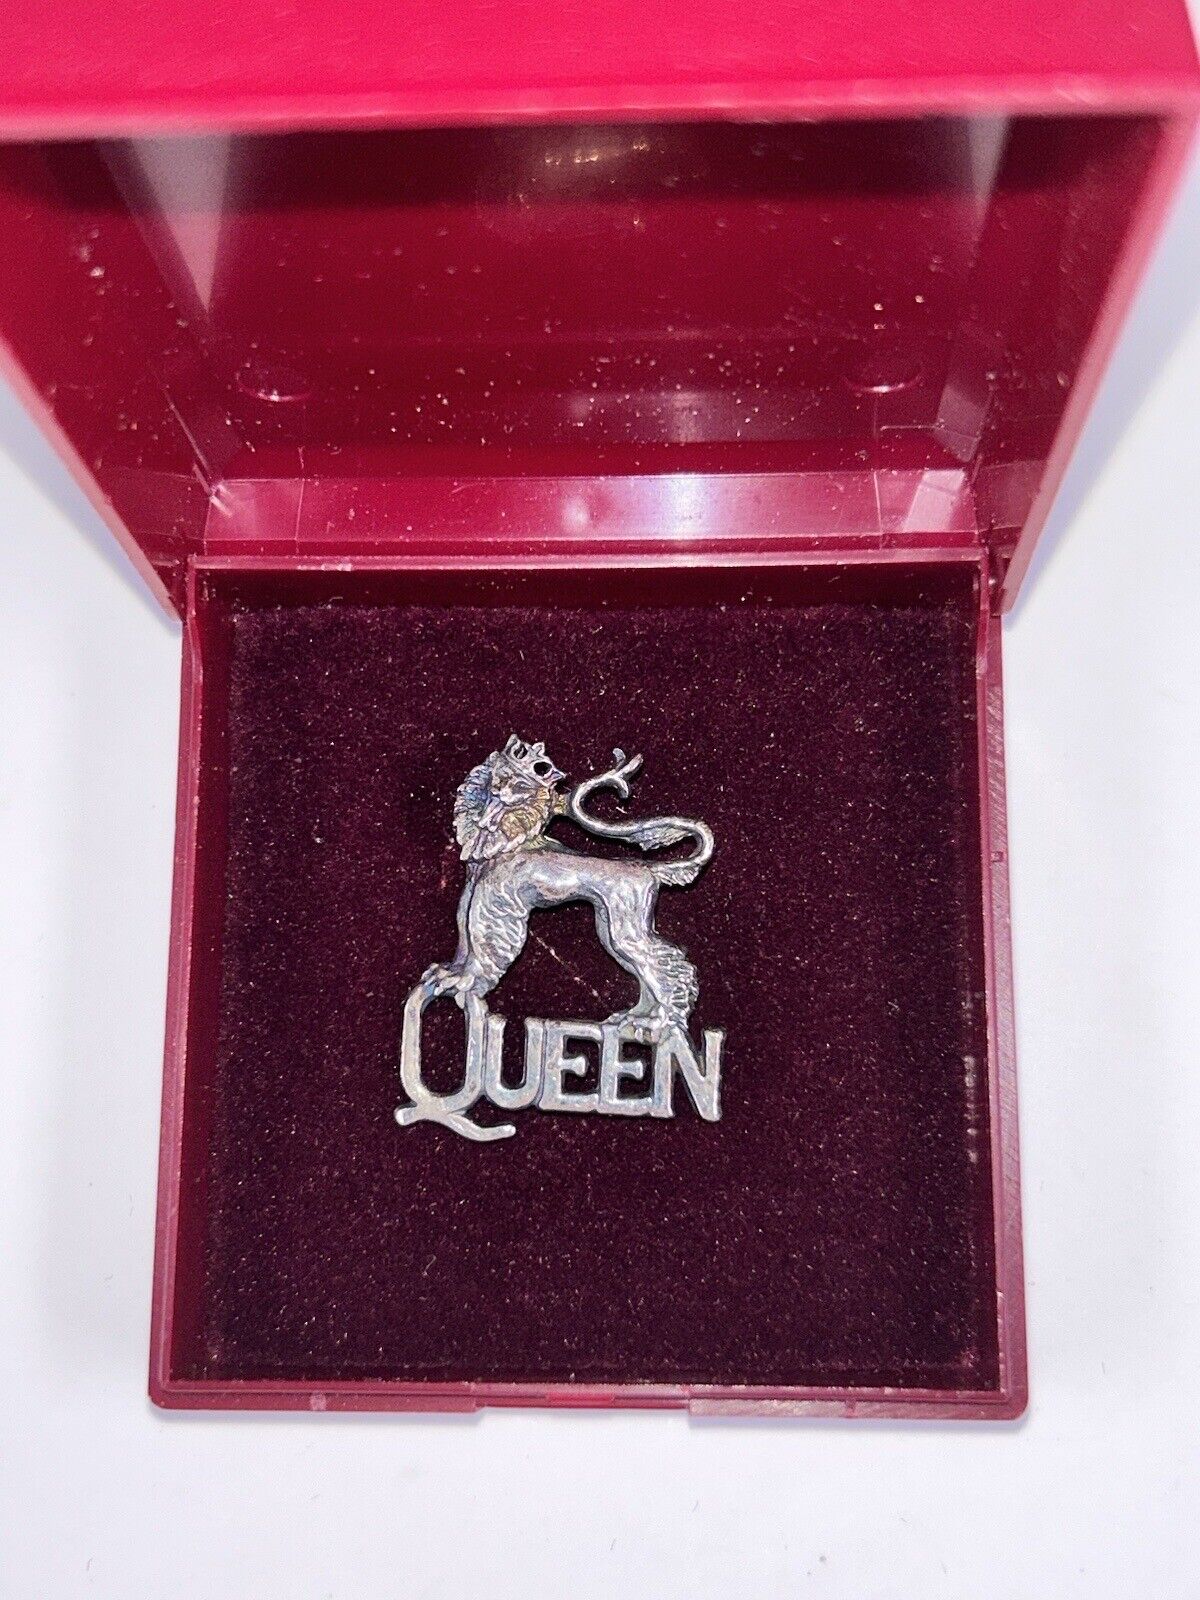 Queen Freddie Mercury Badge Pin Solid Silver Official Fan Club Merchandise 1992